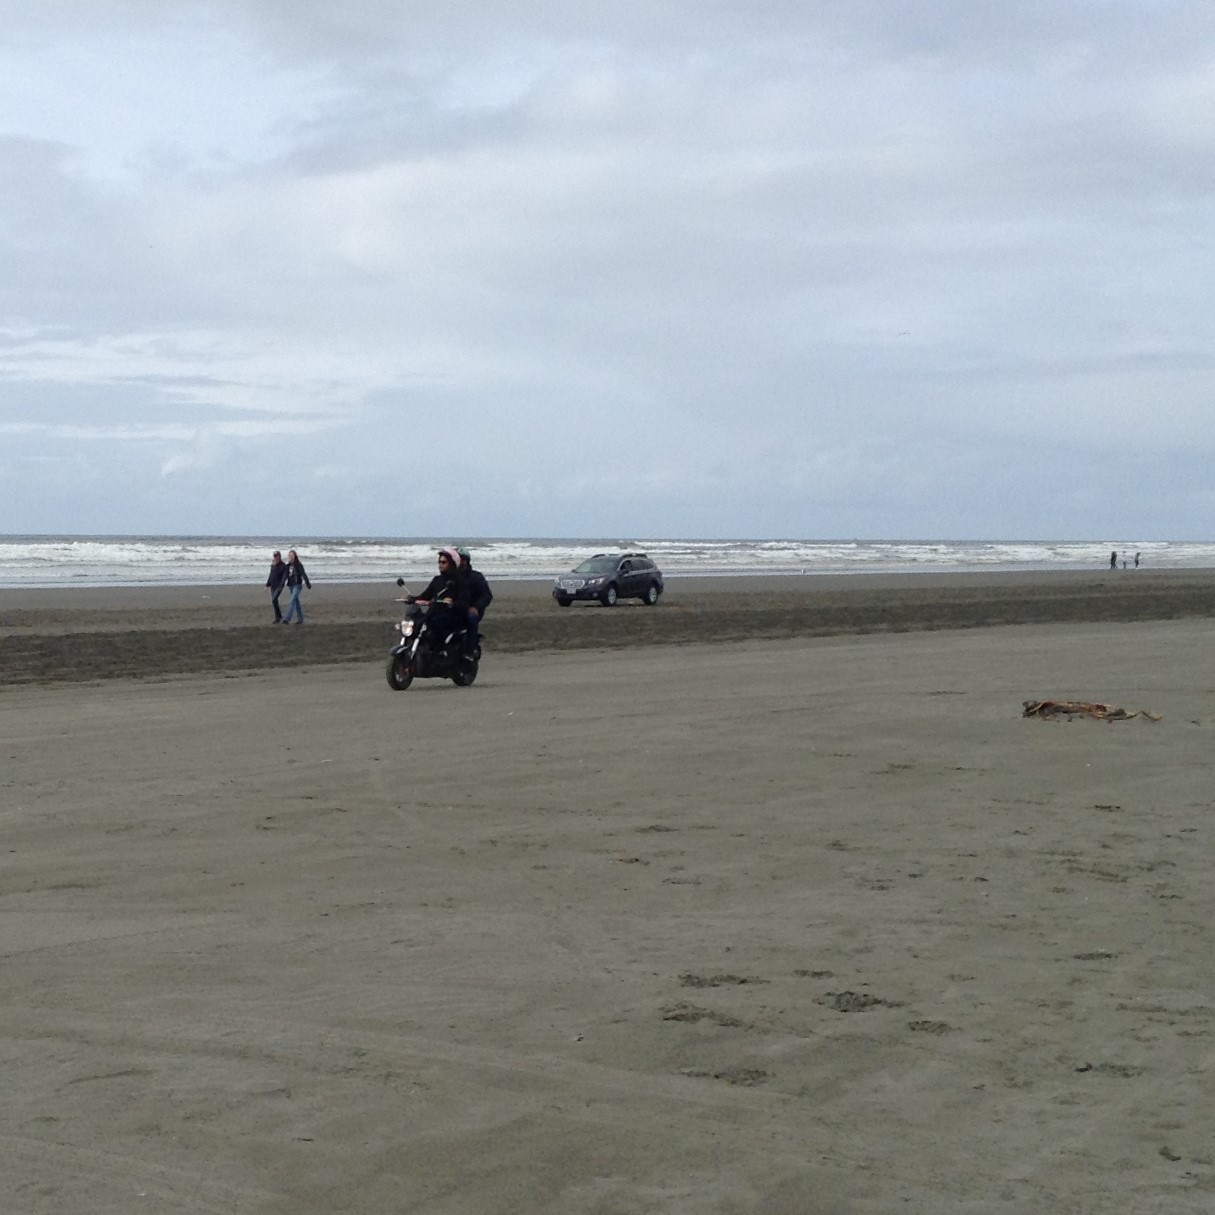 Beach life moped rentals on beach #graysharborbeaches